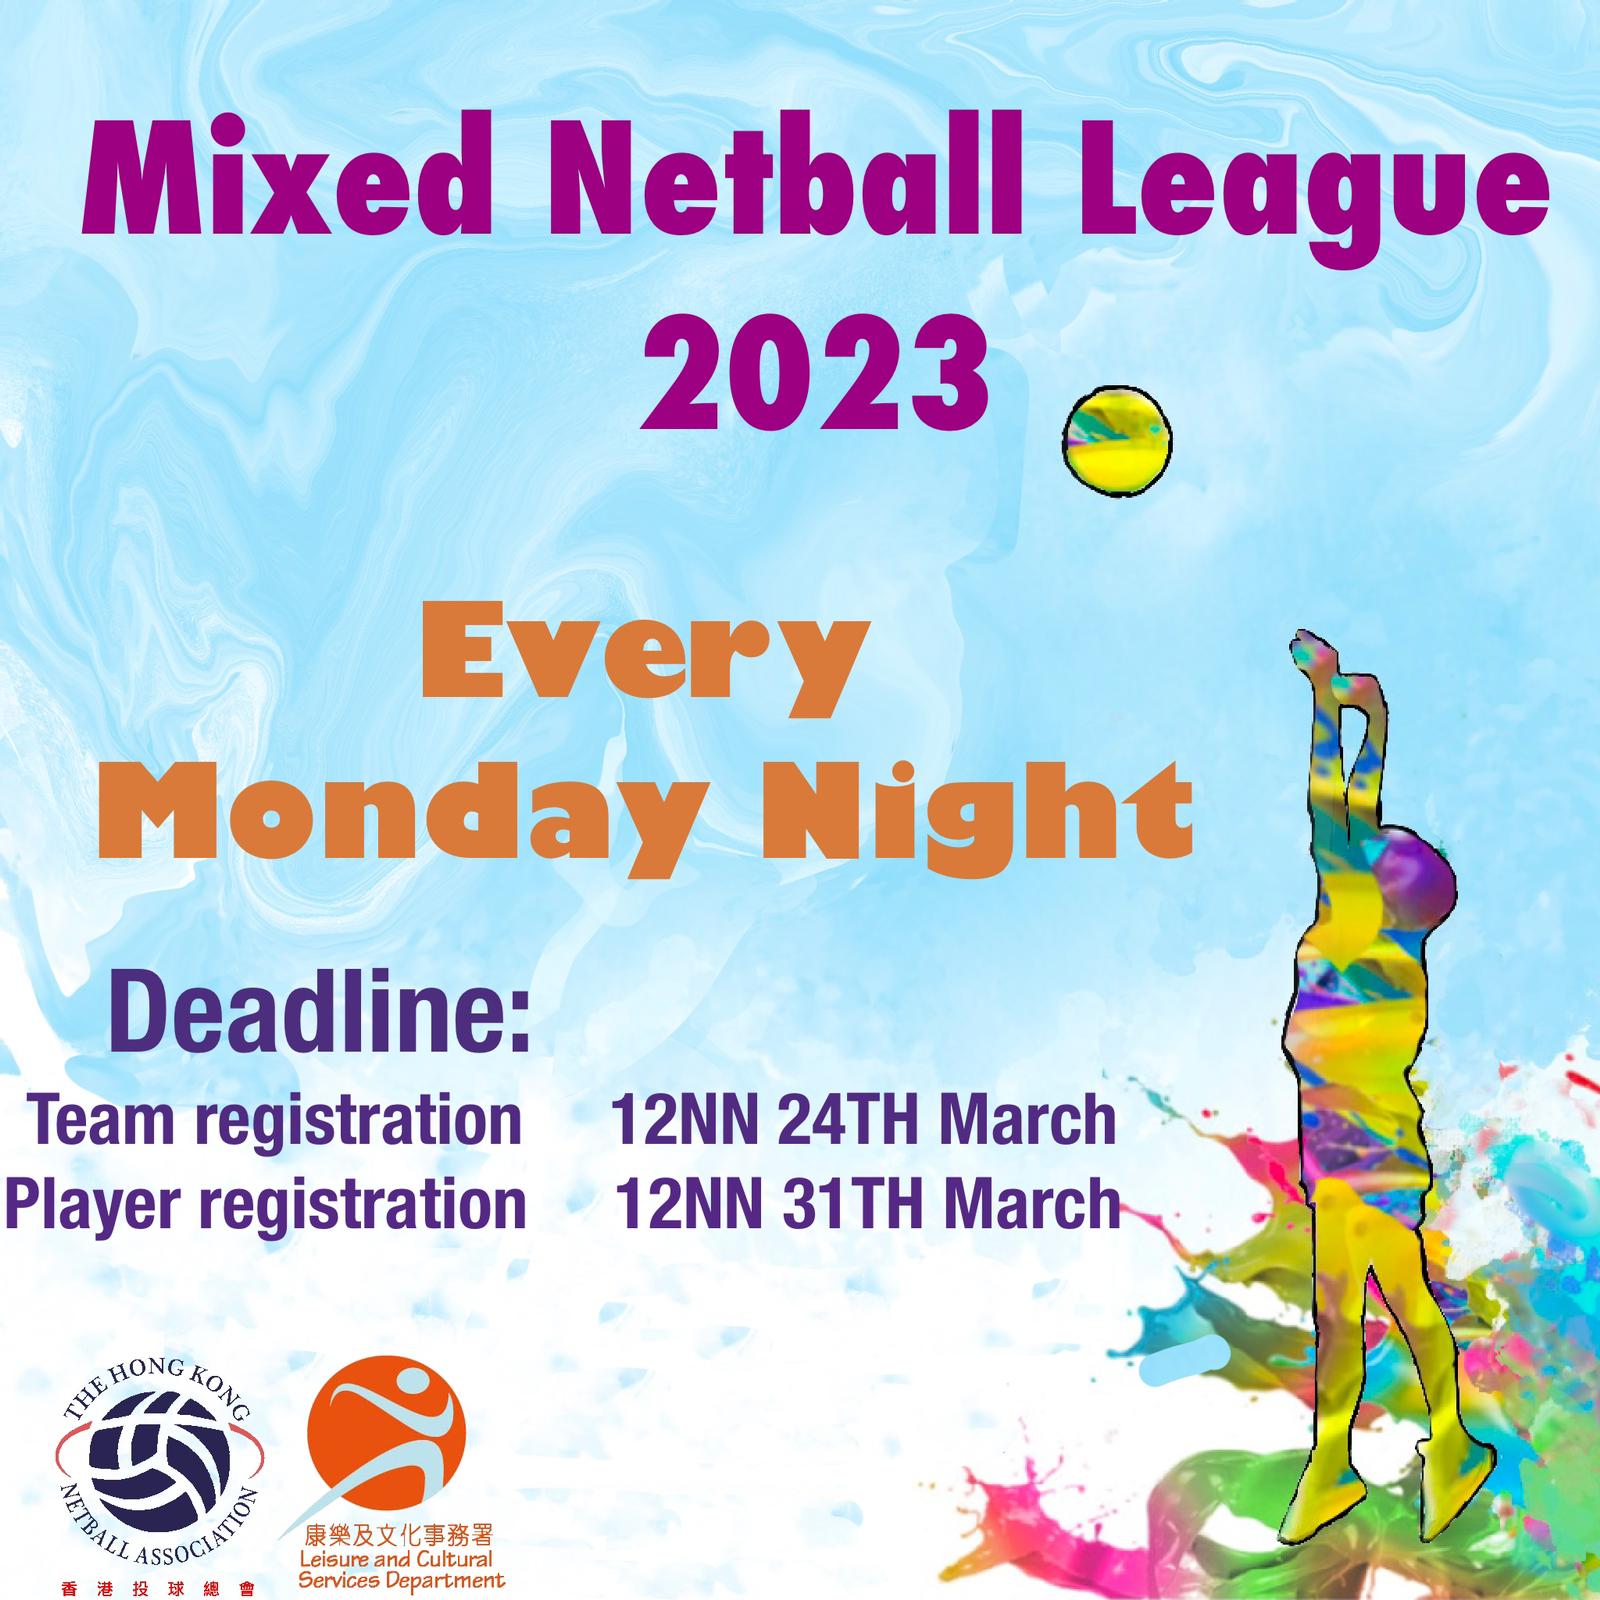 Mixed Netball League 2023